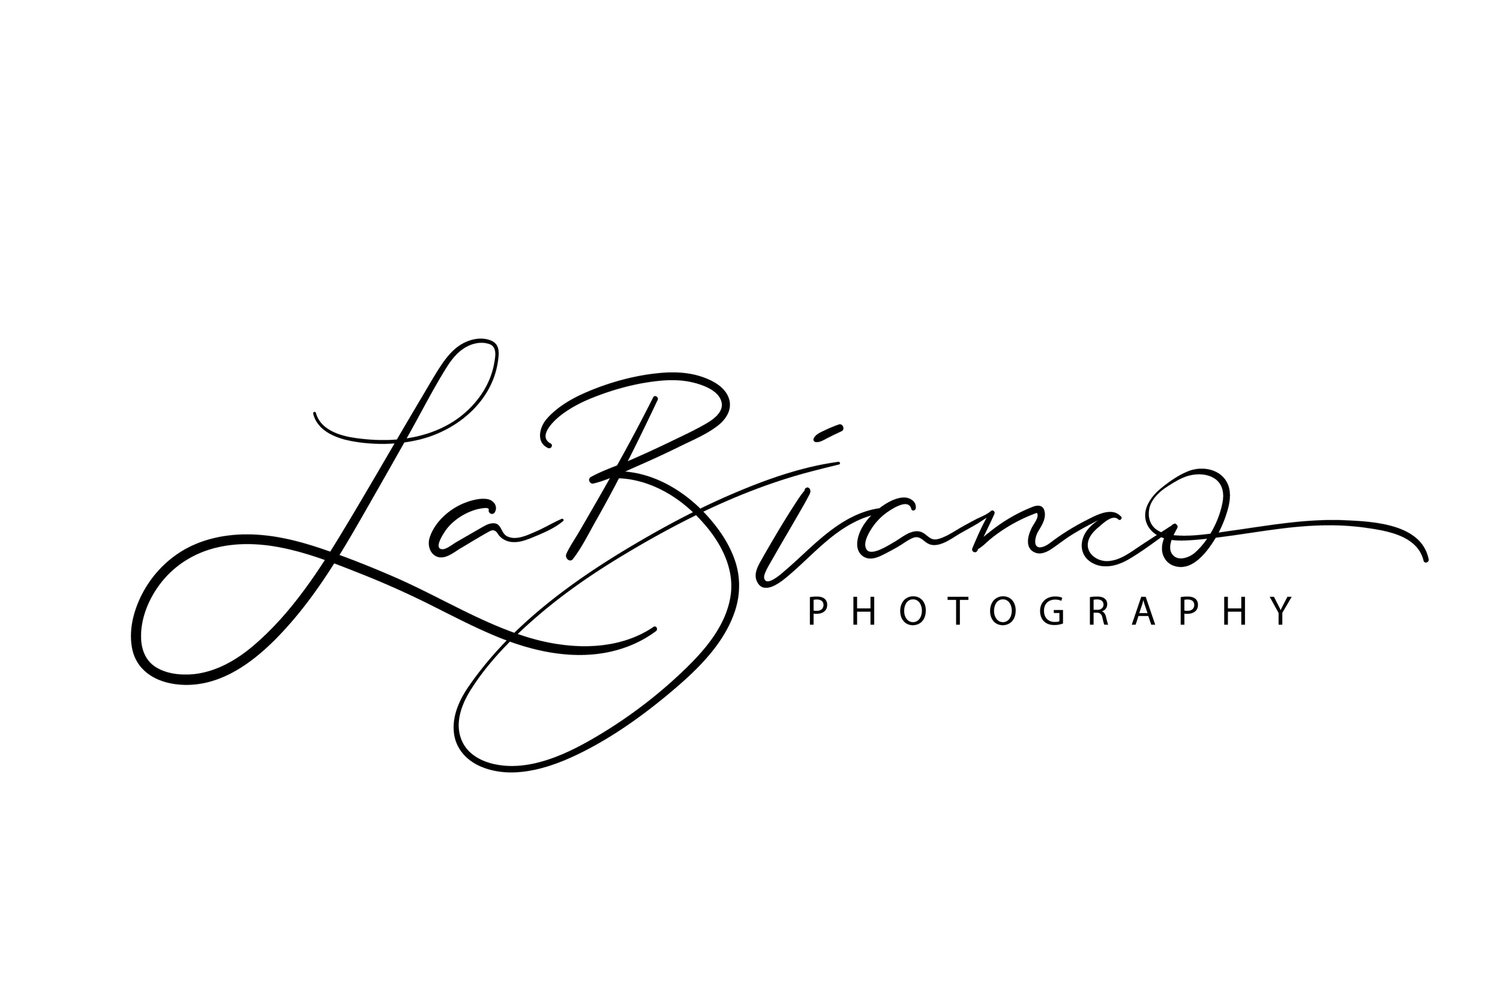 LaBianco Photography